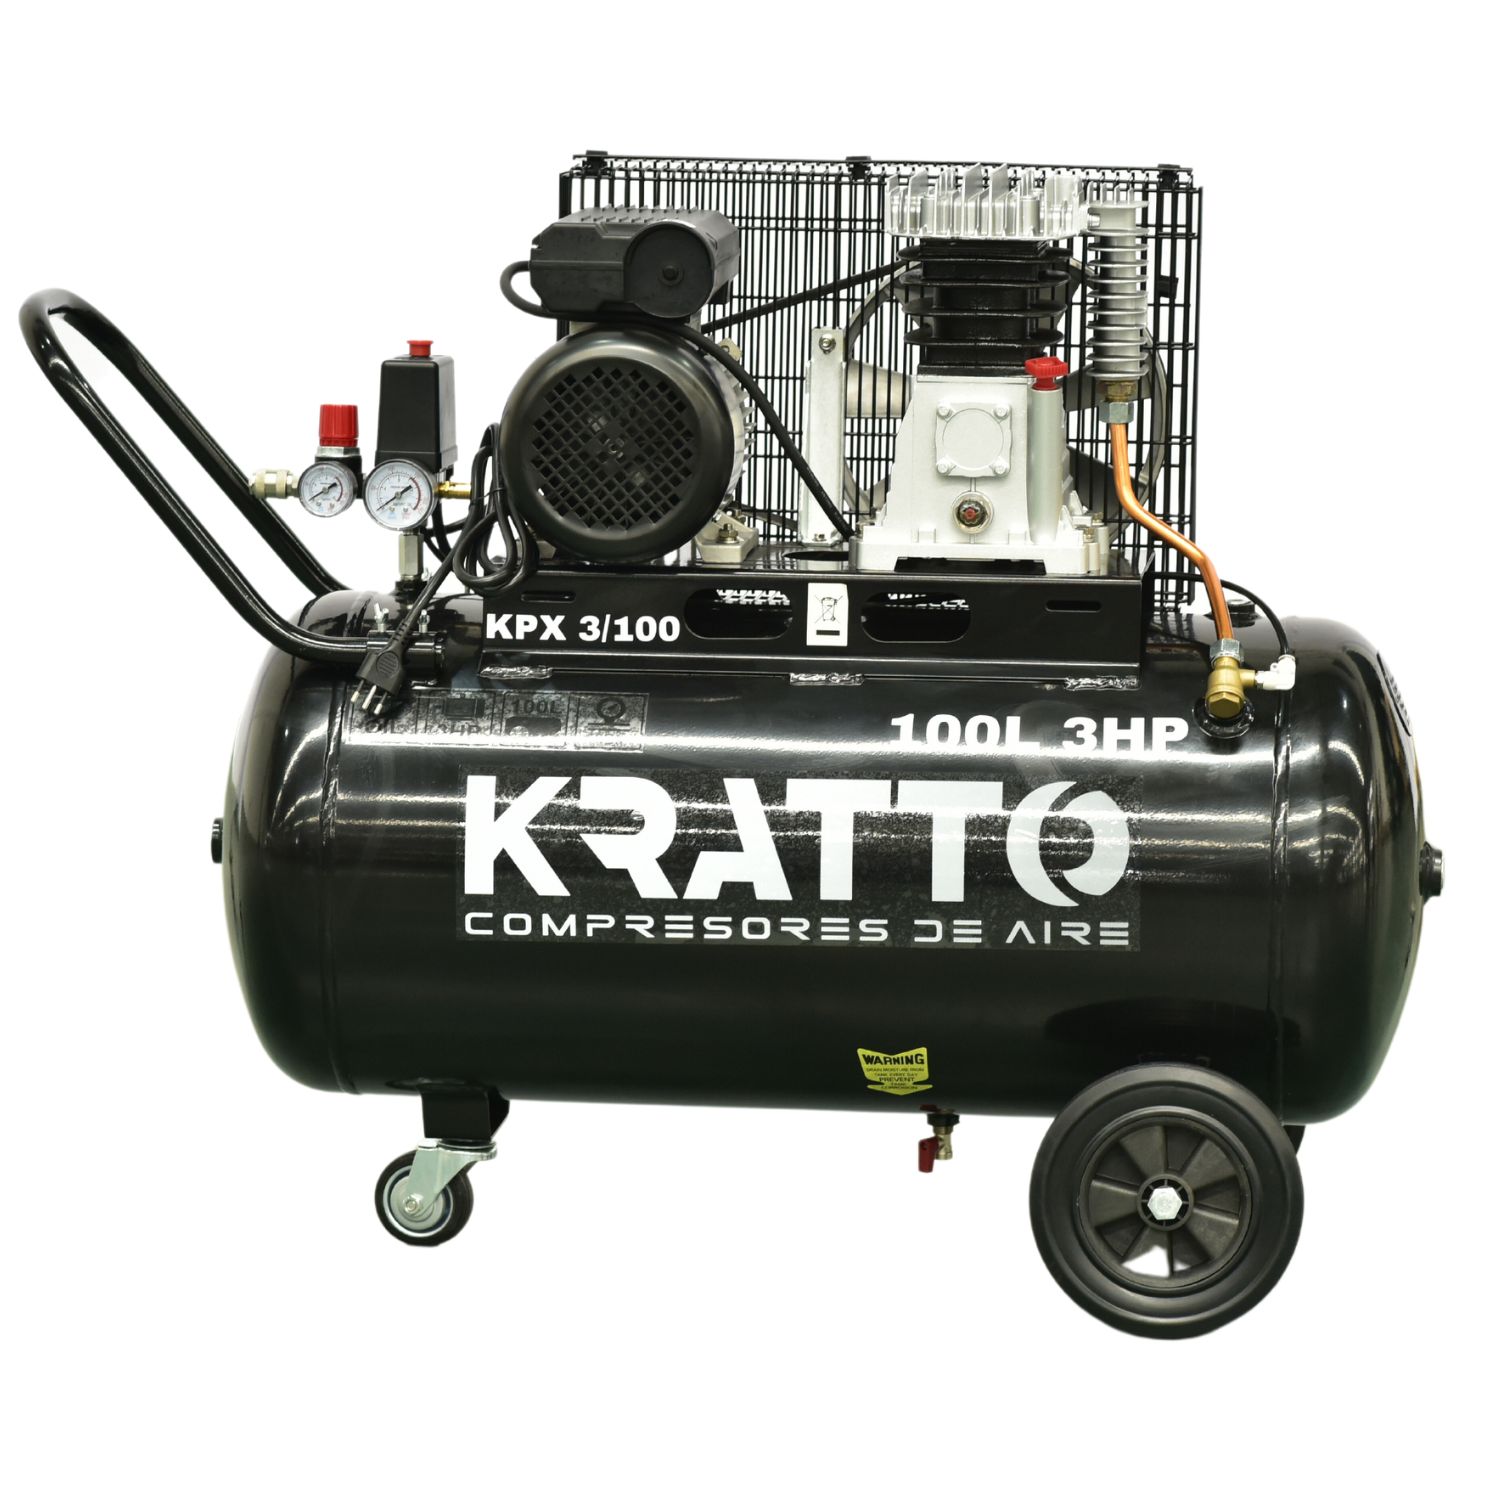 Compresor de Aire 3HP 100Litros - KPX 3/100 KRATTO